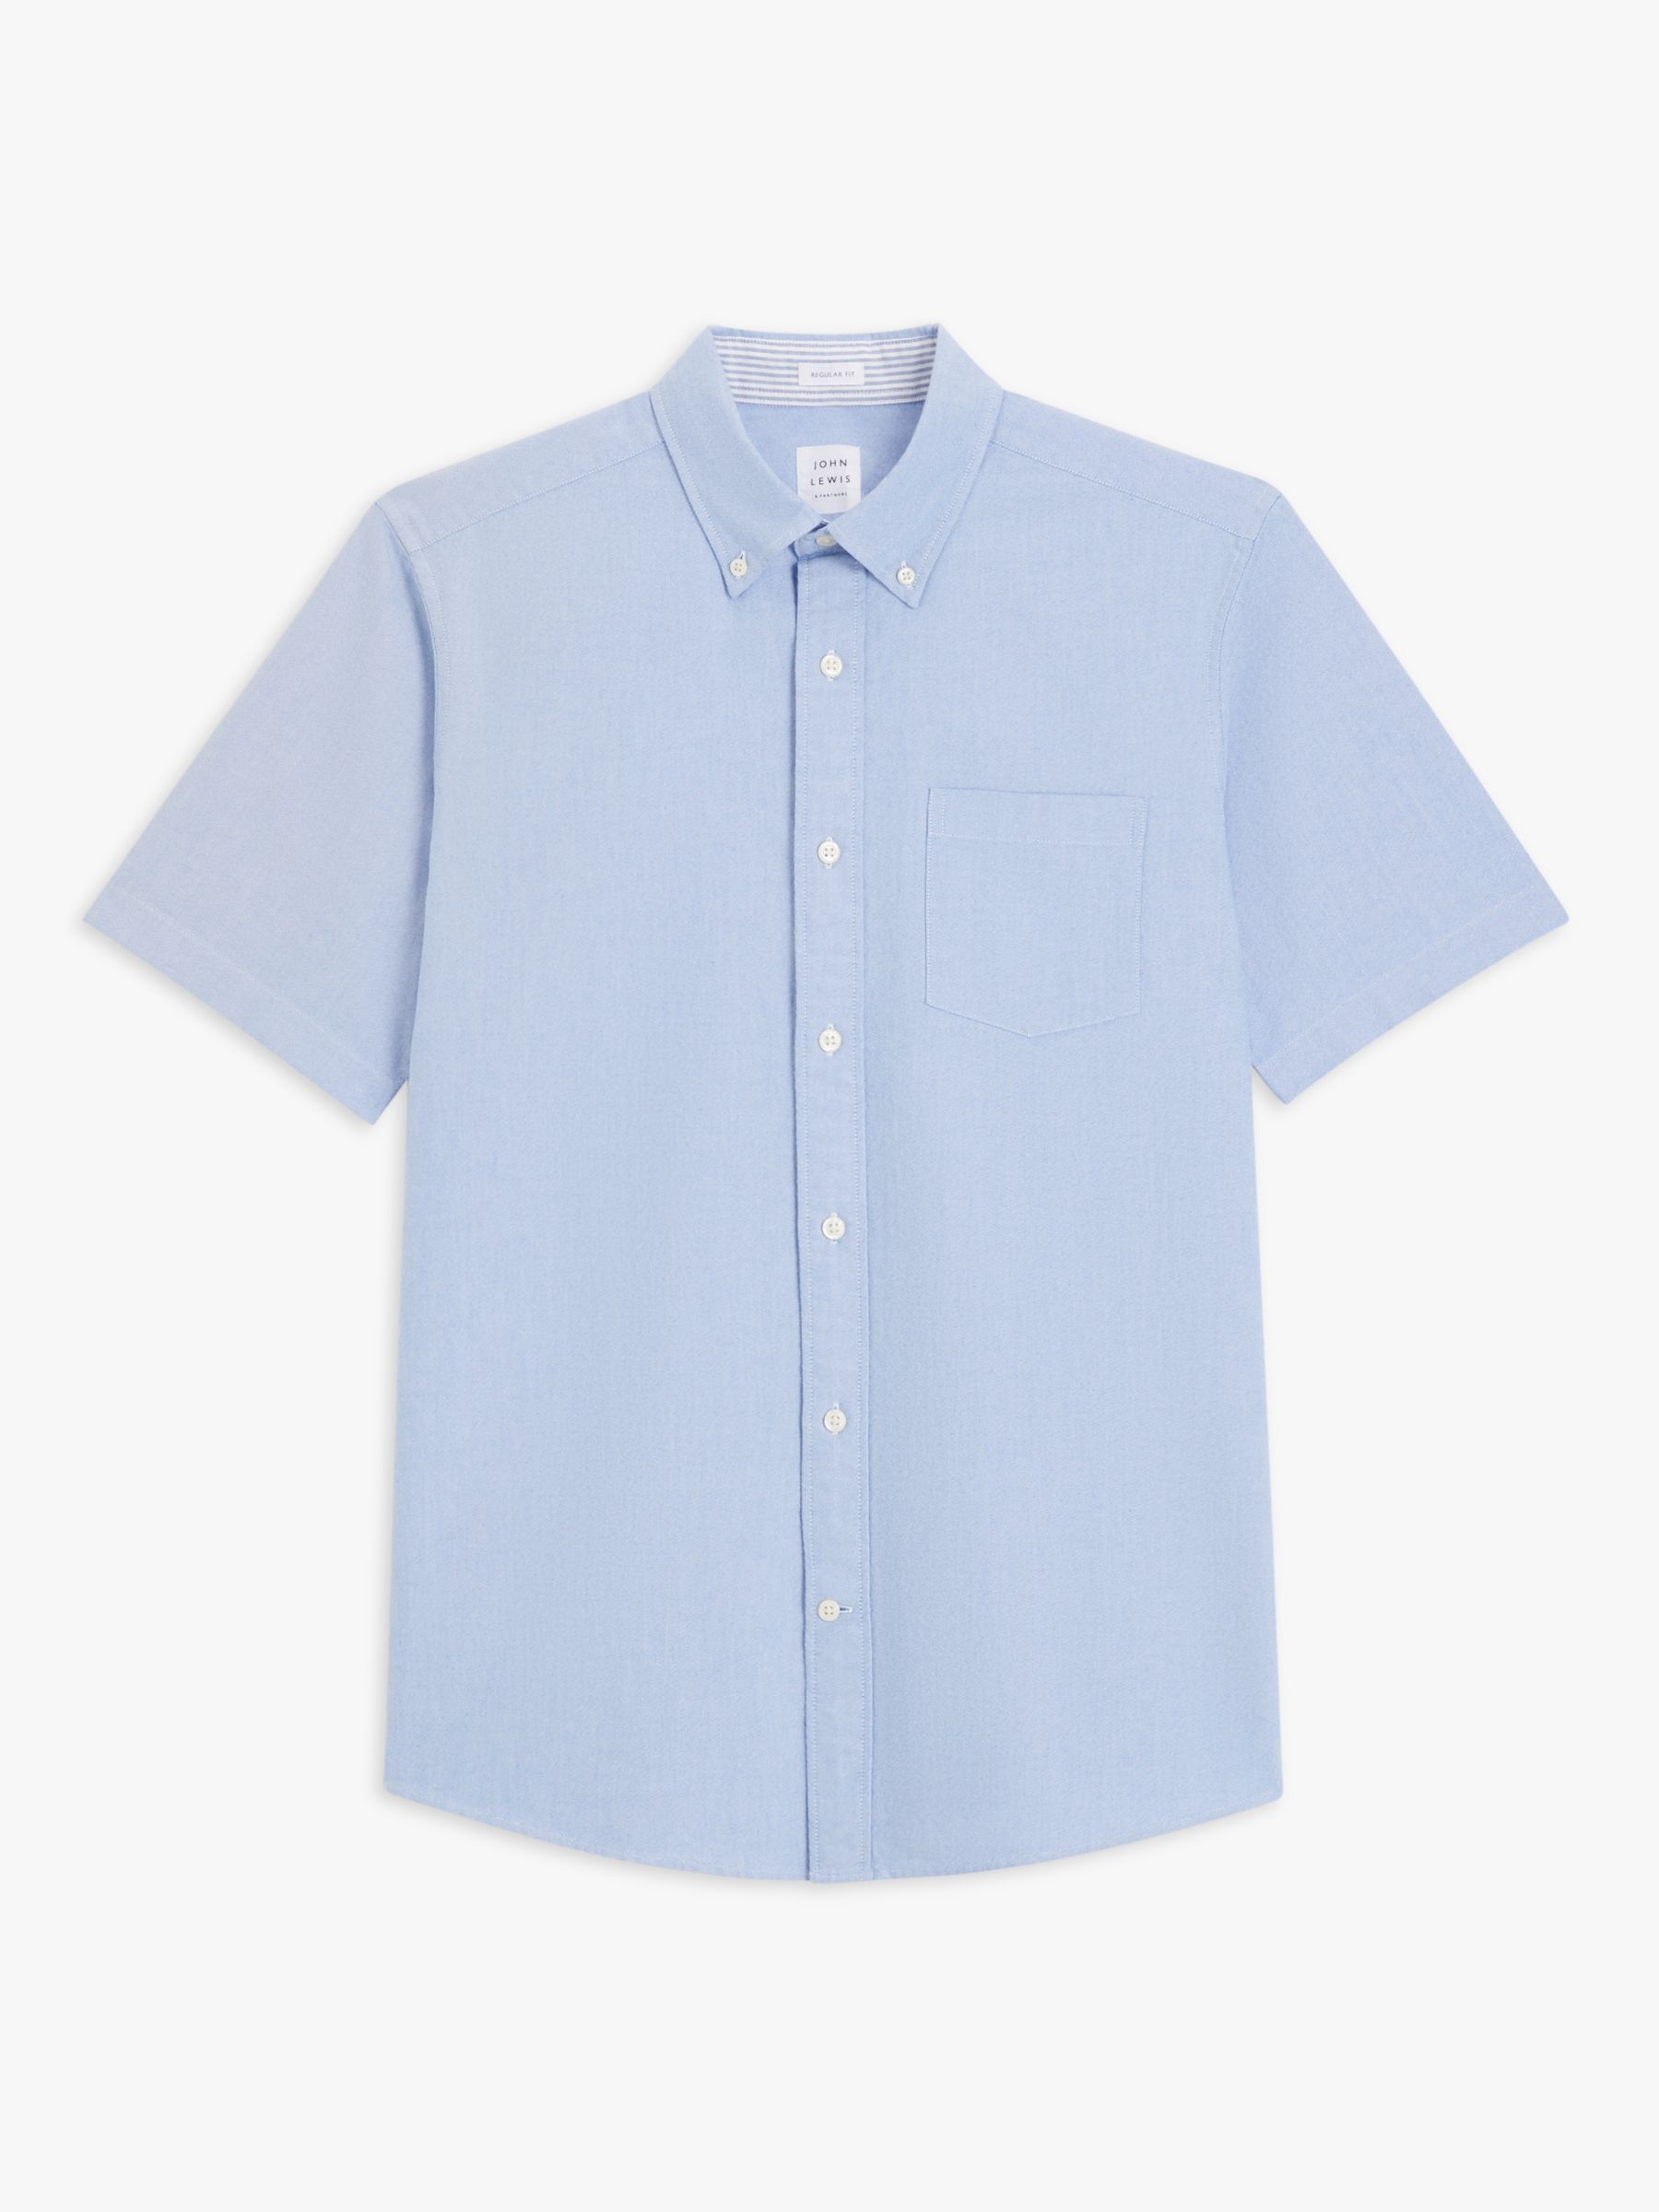 John Lewis Regular Fit Short Sleeve Shirt, Blue at John Lewis & Partners